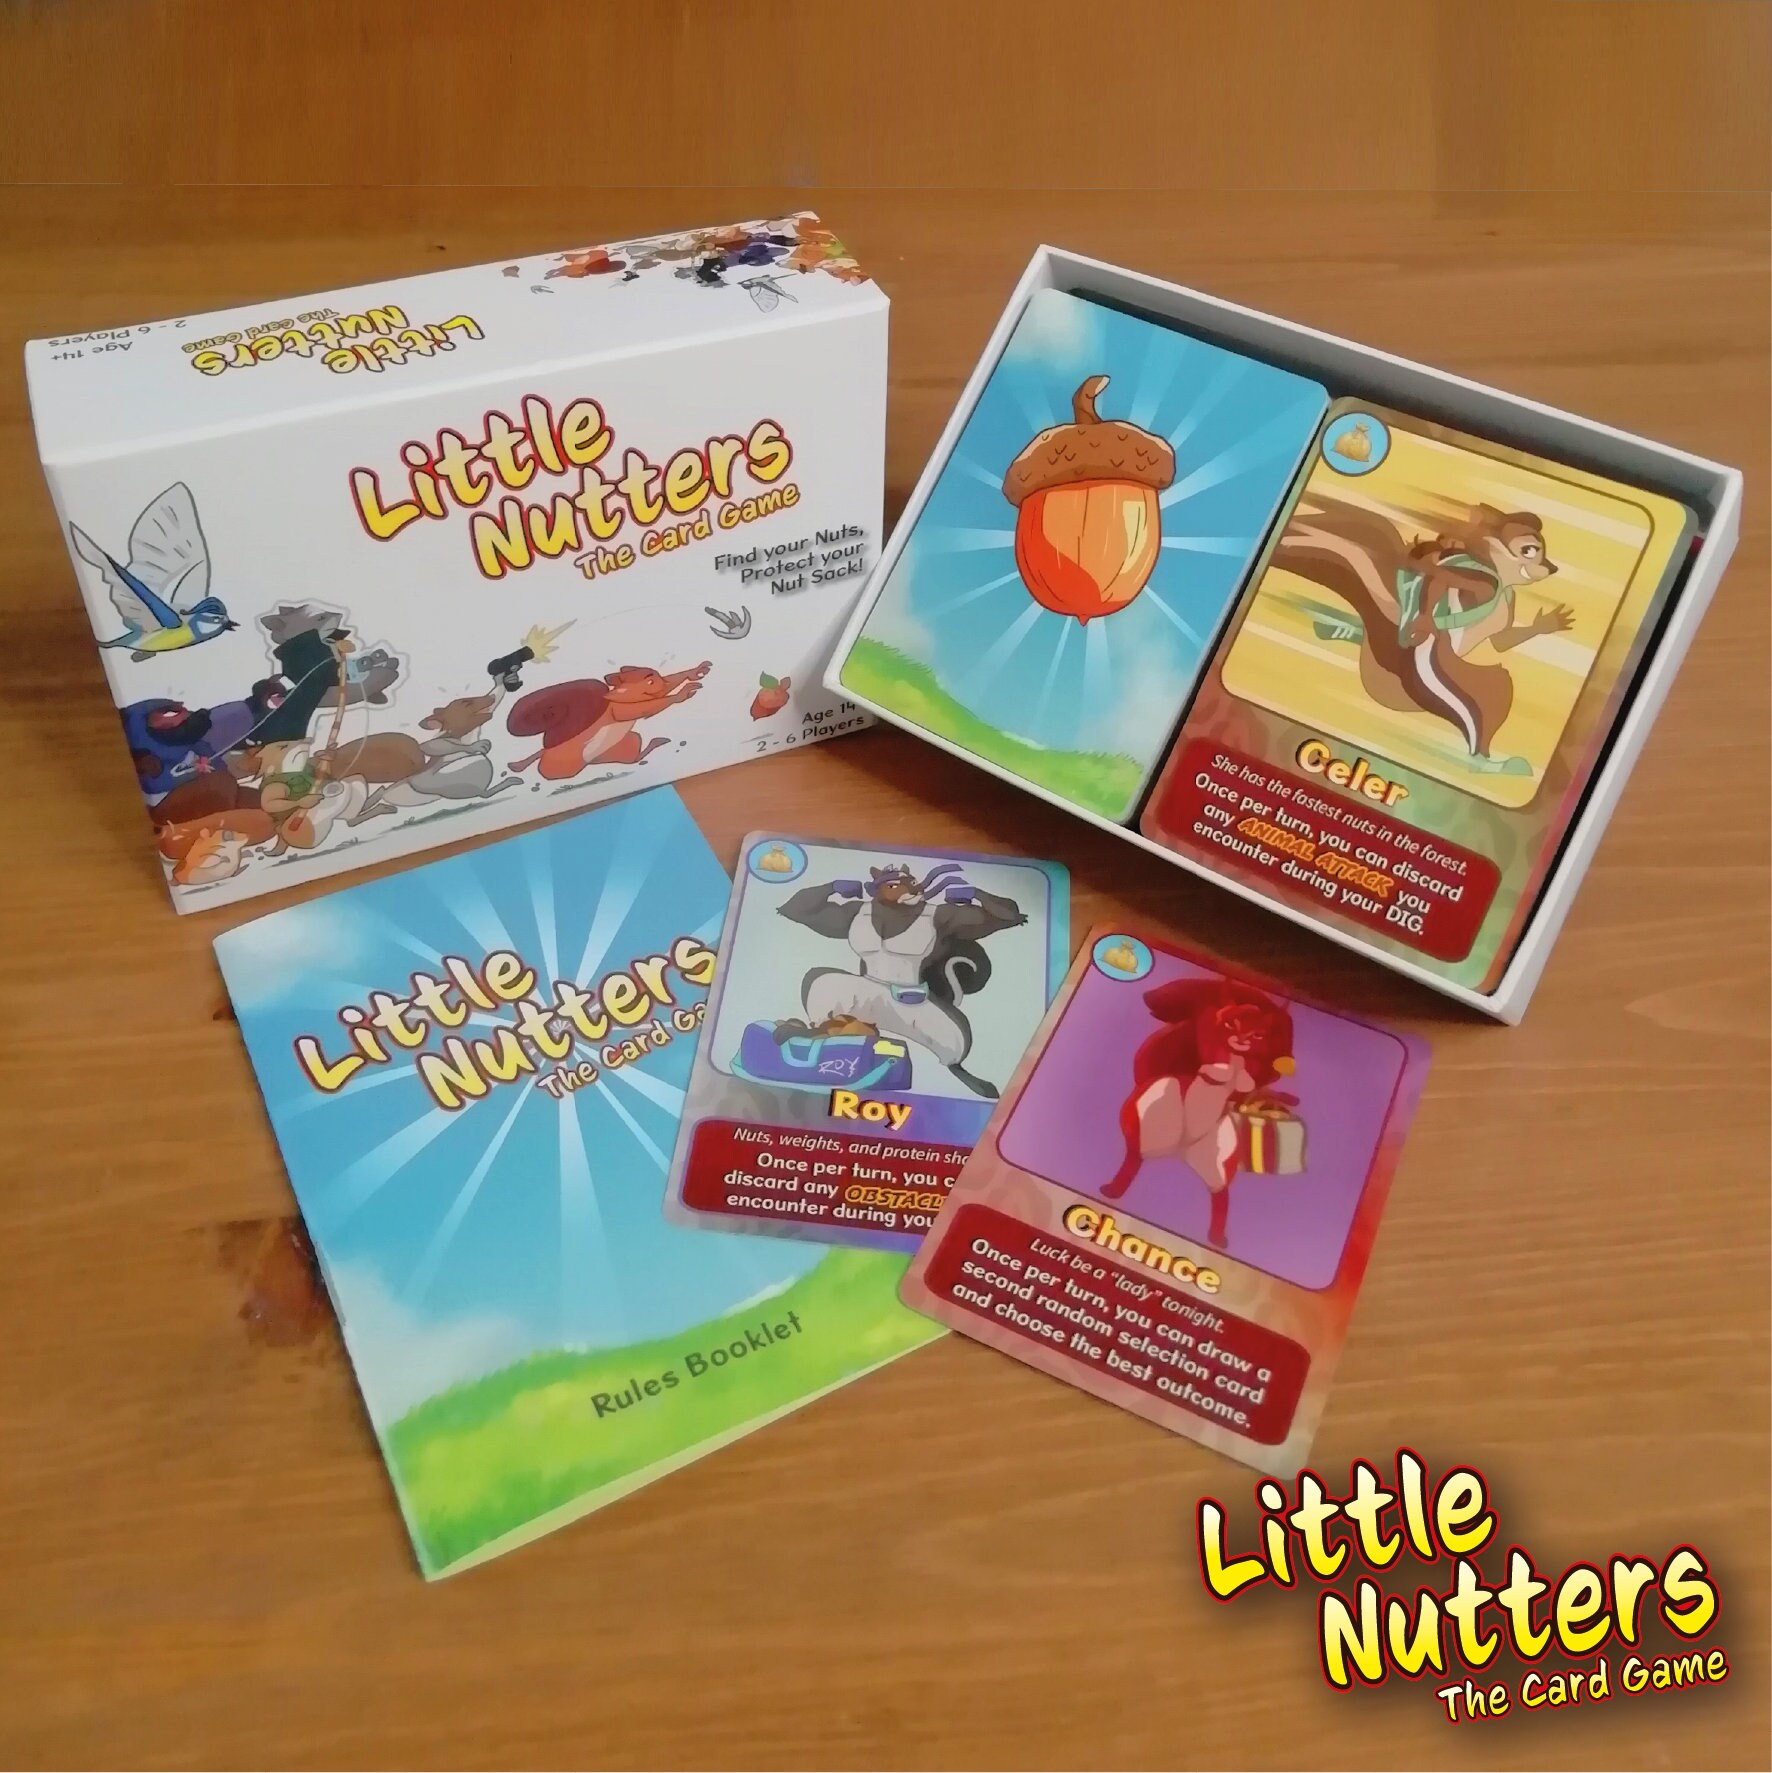 Michigan women launch 'Hide Your Nuts' card game 